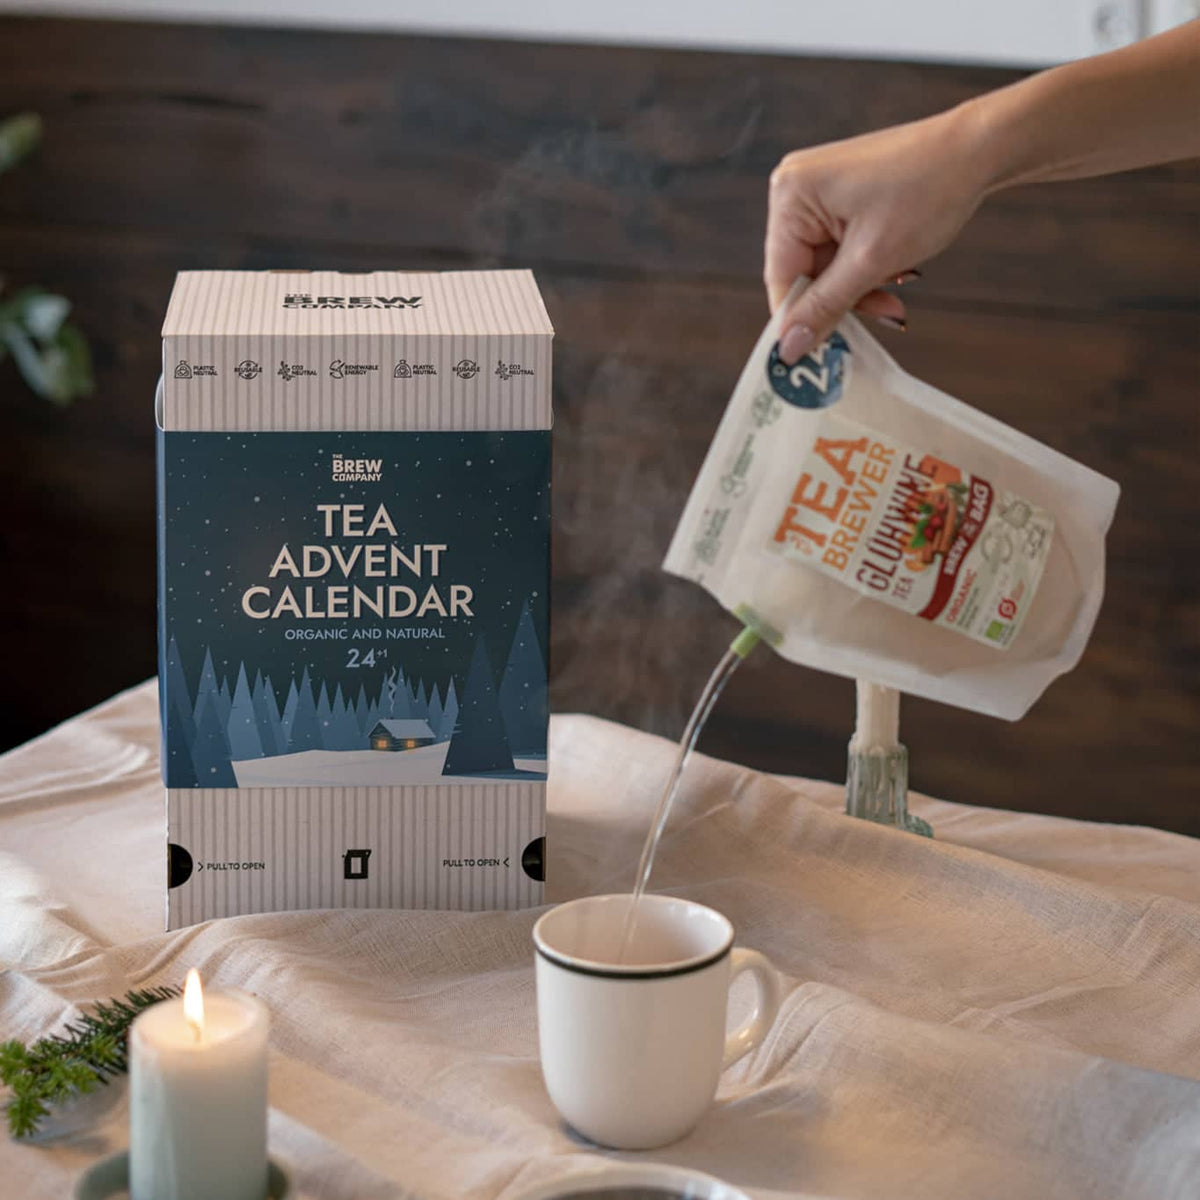 TEA ADVENT CALENDAR Gift Boxes The Brew Company